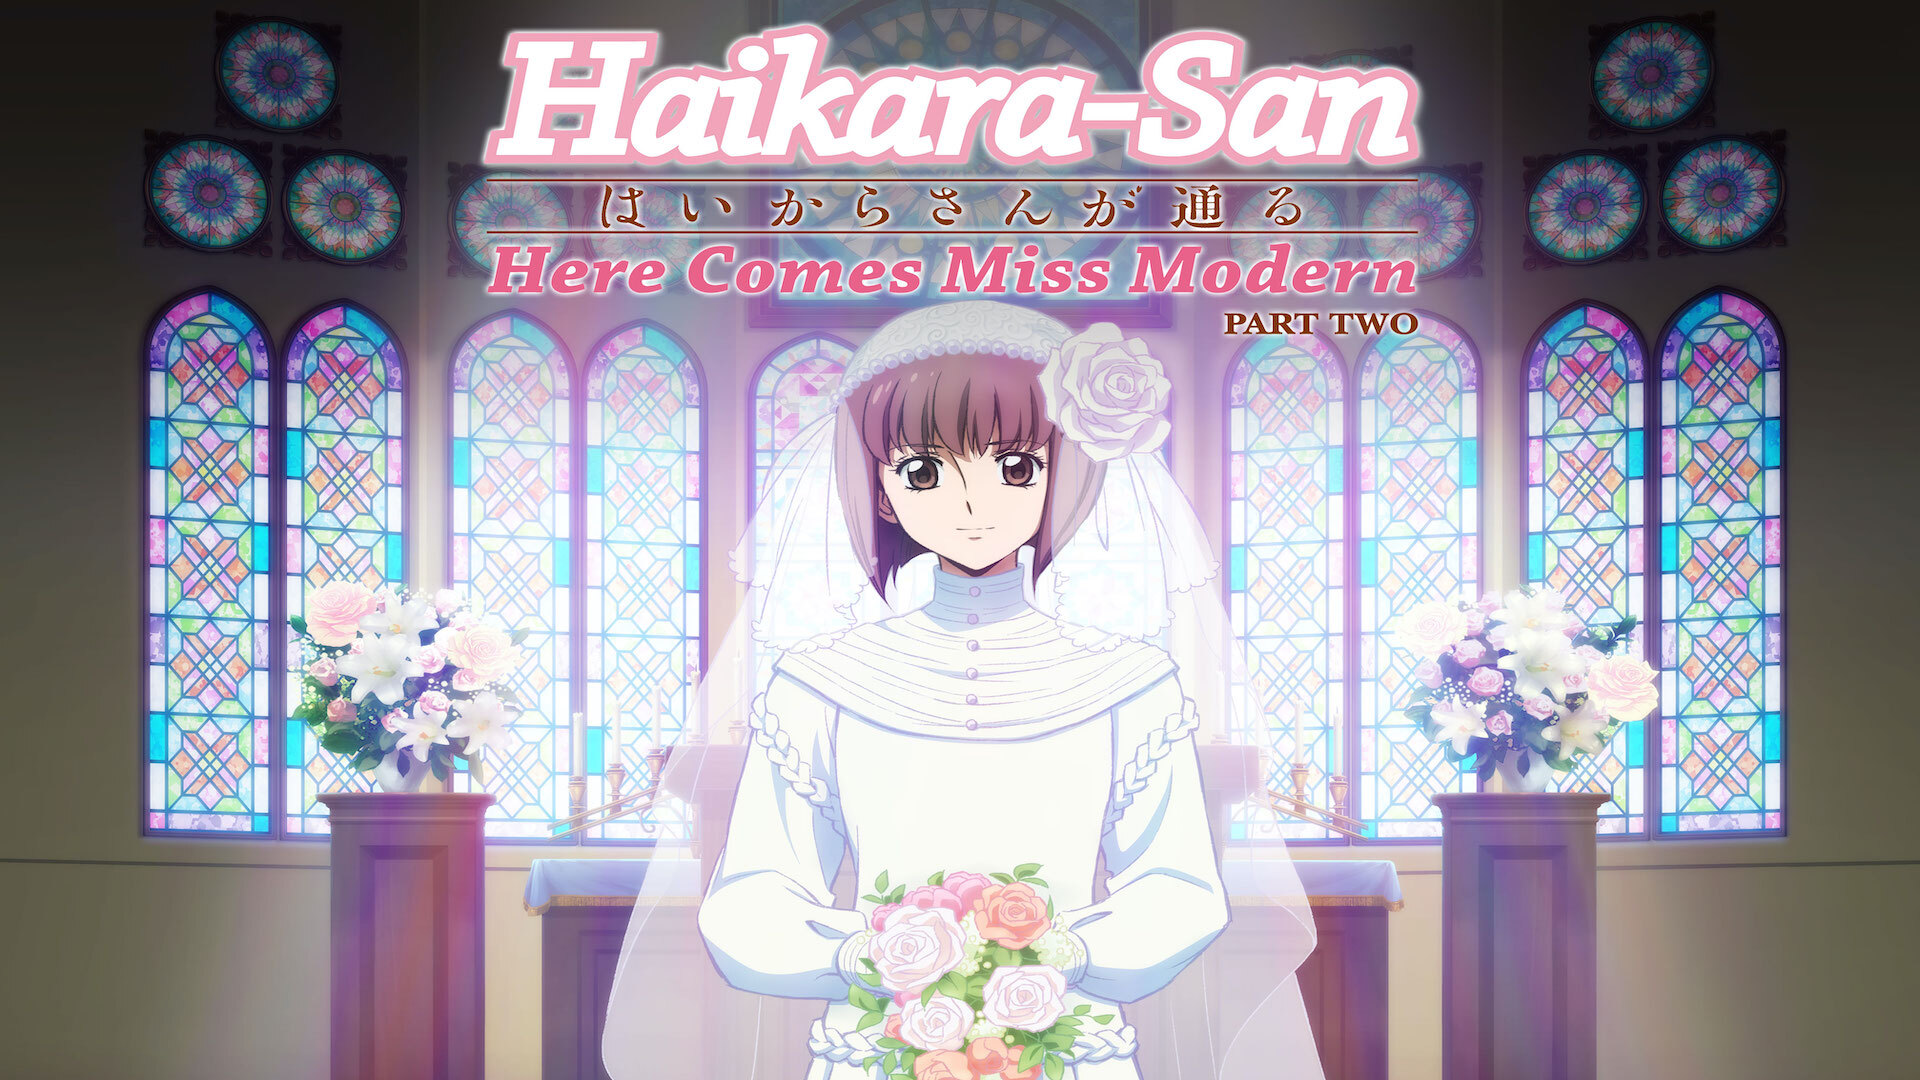 ShoutFactoryTV : Watch Haikara-San: Here Comes Miss Modern: Part 2  [Japanese-Language Version]